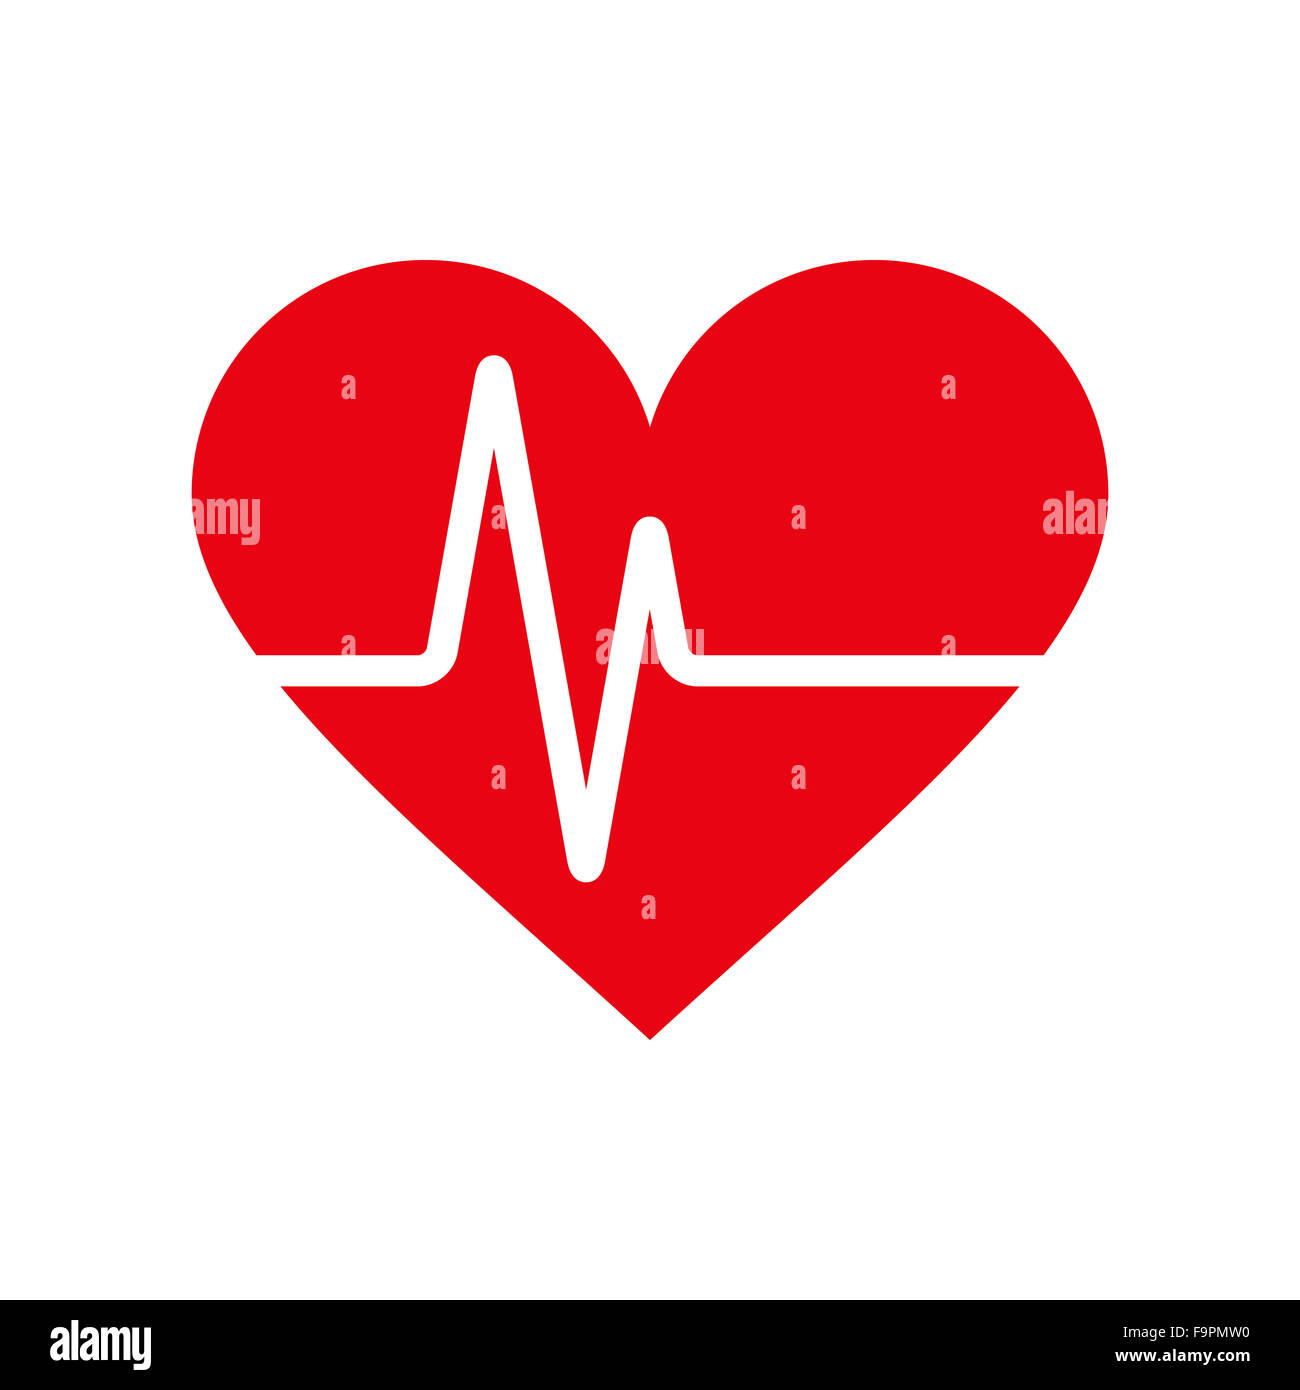 Heartbeat icon. Electrocardiogram, ecg or ekg isolated on white background Stock Photo